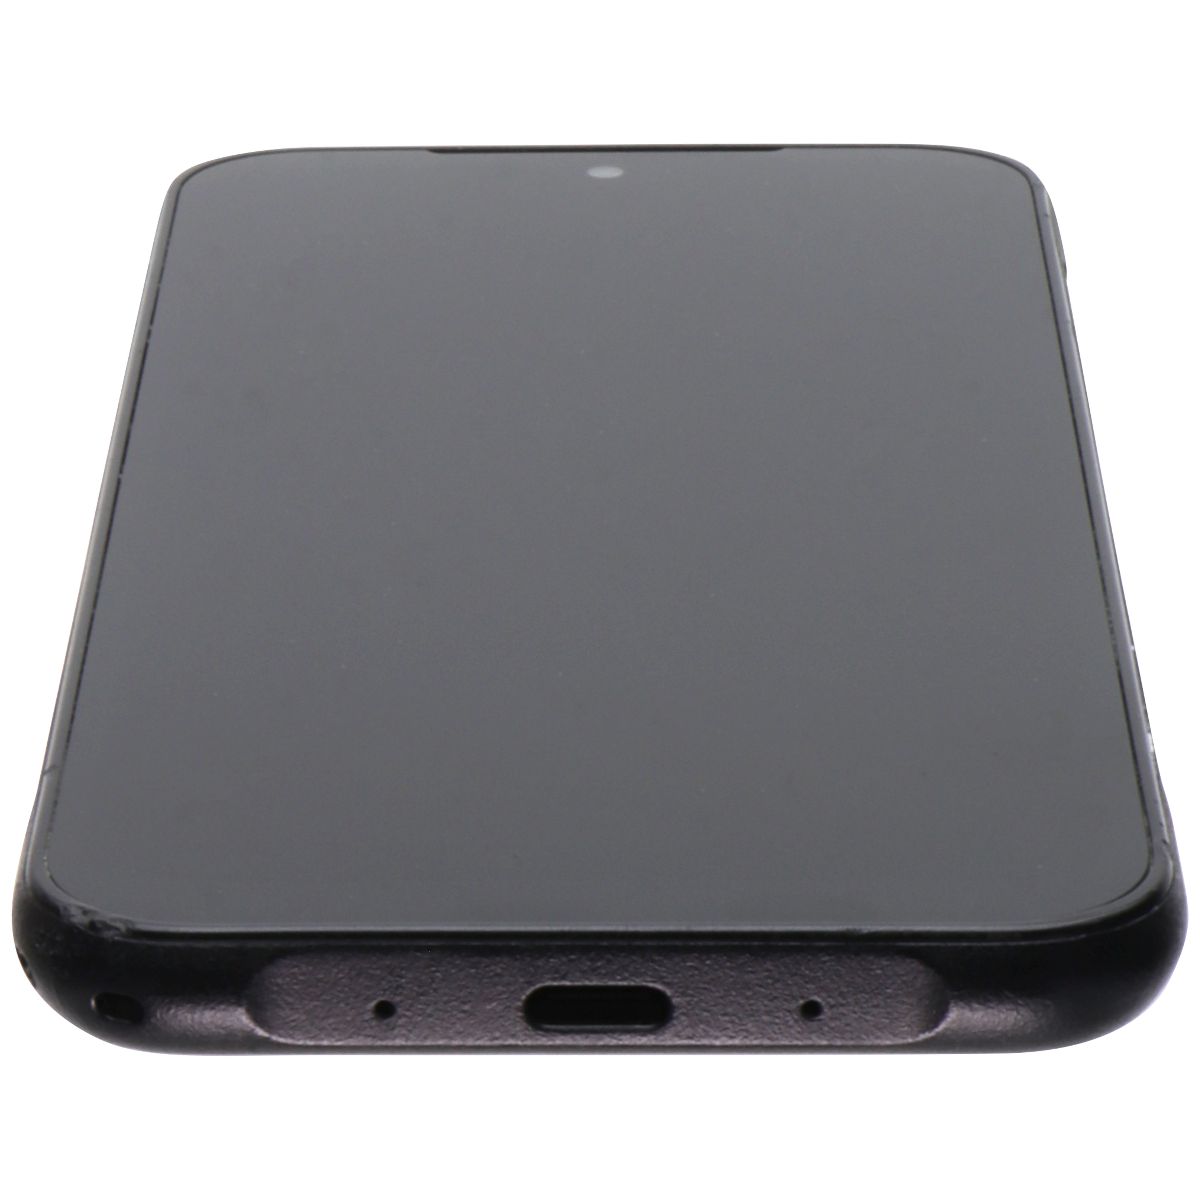 Kyocera Durasport 5G UW (6.1-inch) Smartphone C6930 Verizon 64GB / Black Cell Phones & Smartphones Kyocera    - Simple Cell Bulk Wholesale Pricing - USA Seller